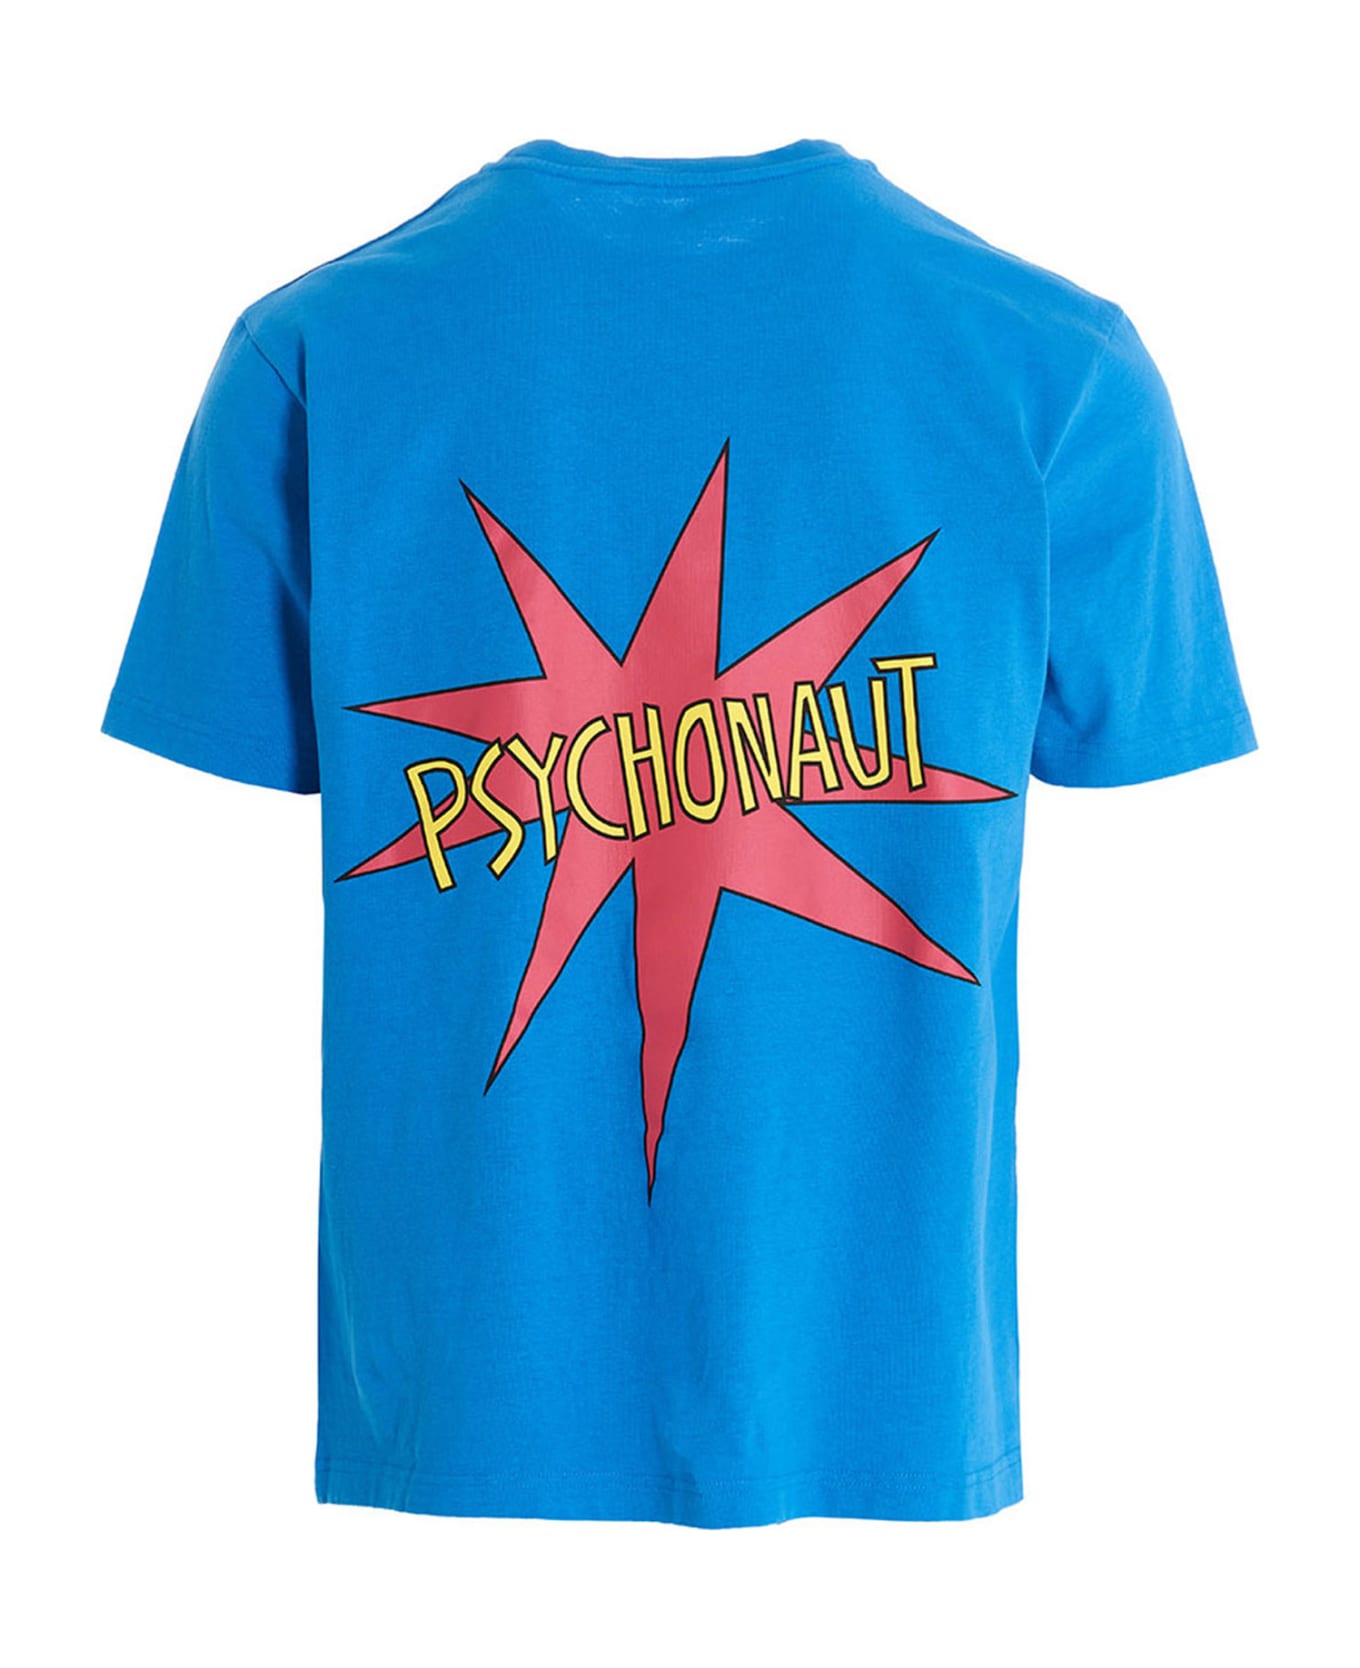 MSFTSrep 'psyconaut' T-shirt - C